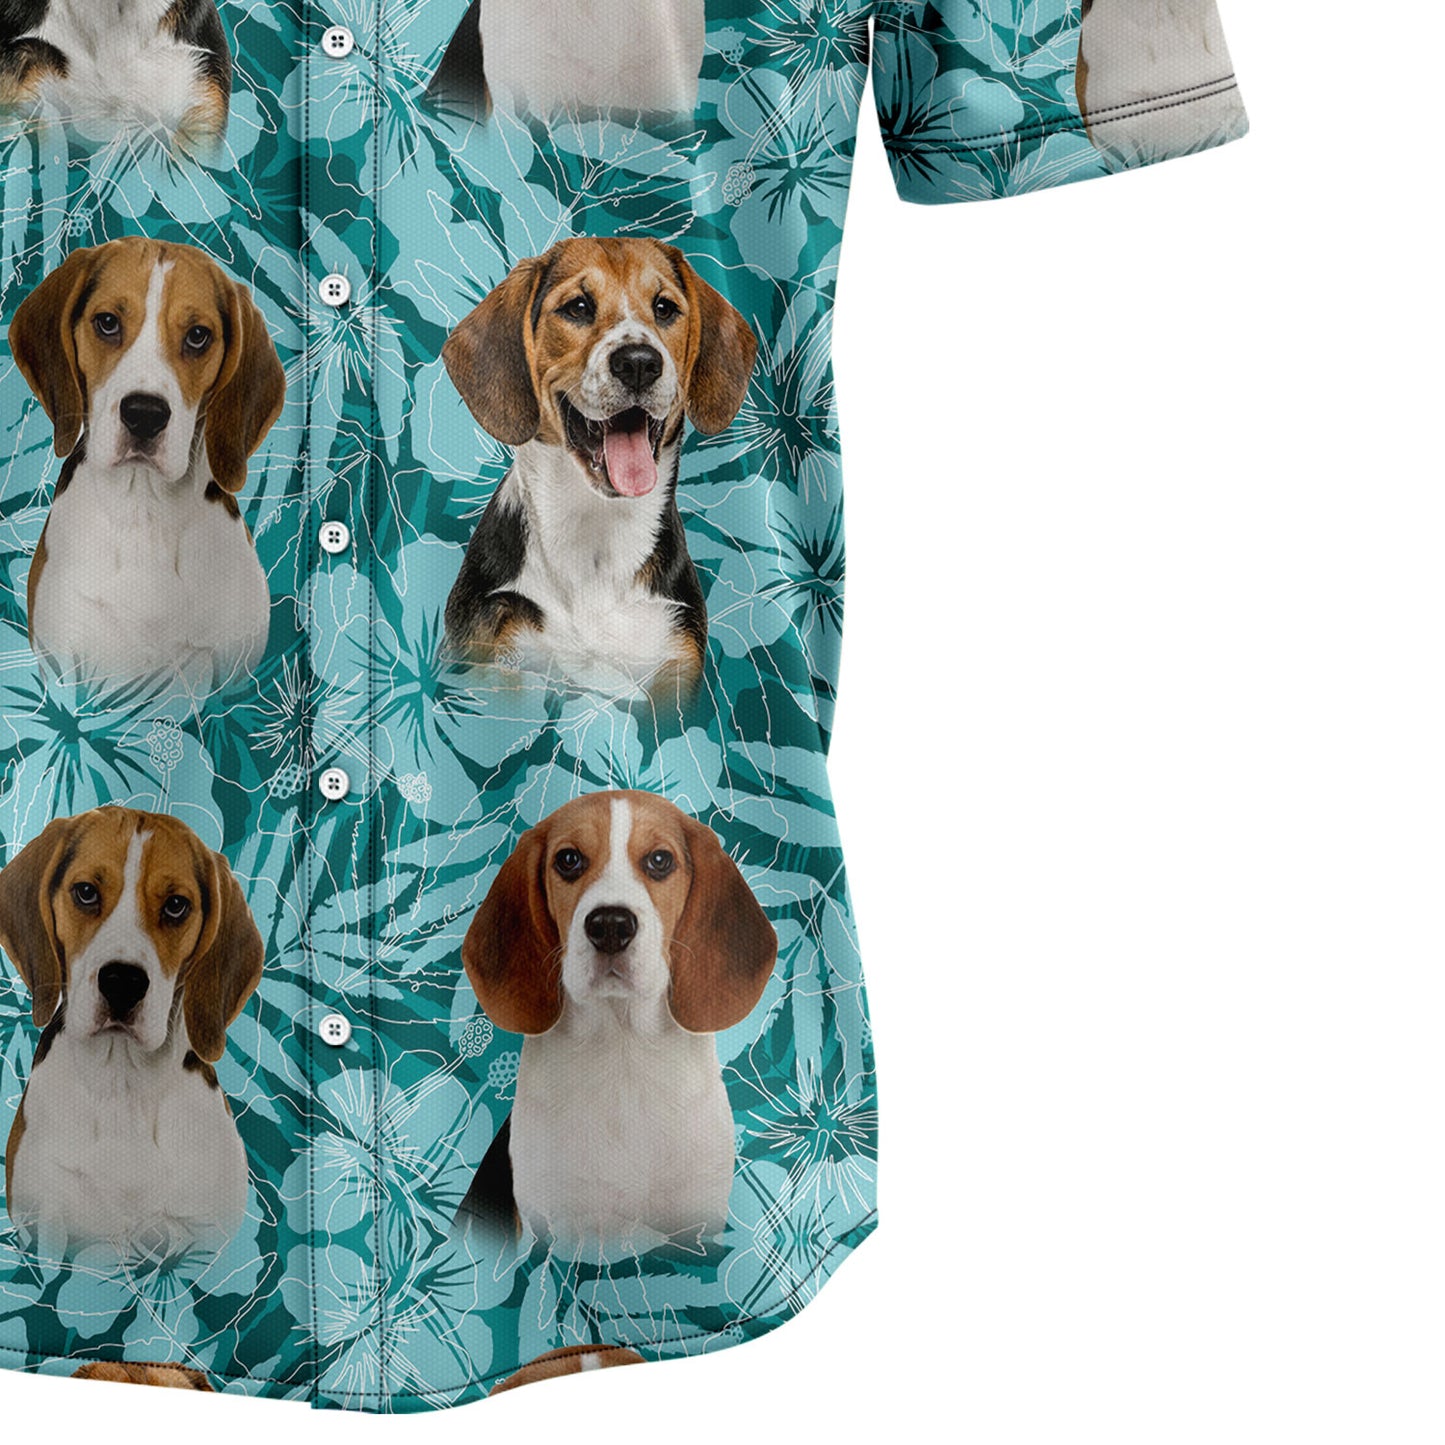 Beagle Summer Vacation G5806 Hawaiian Shirt